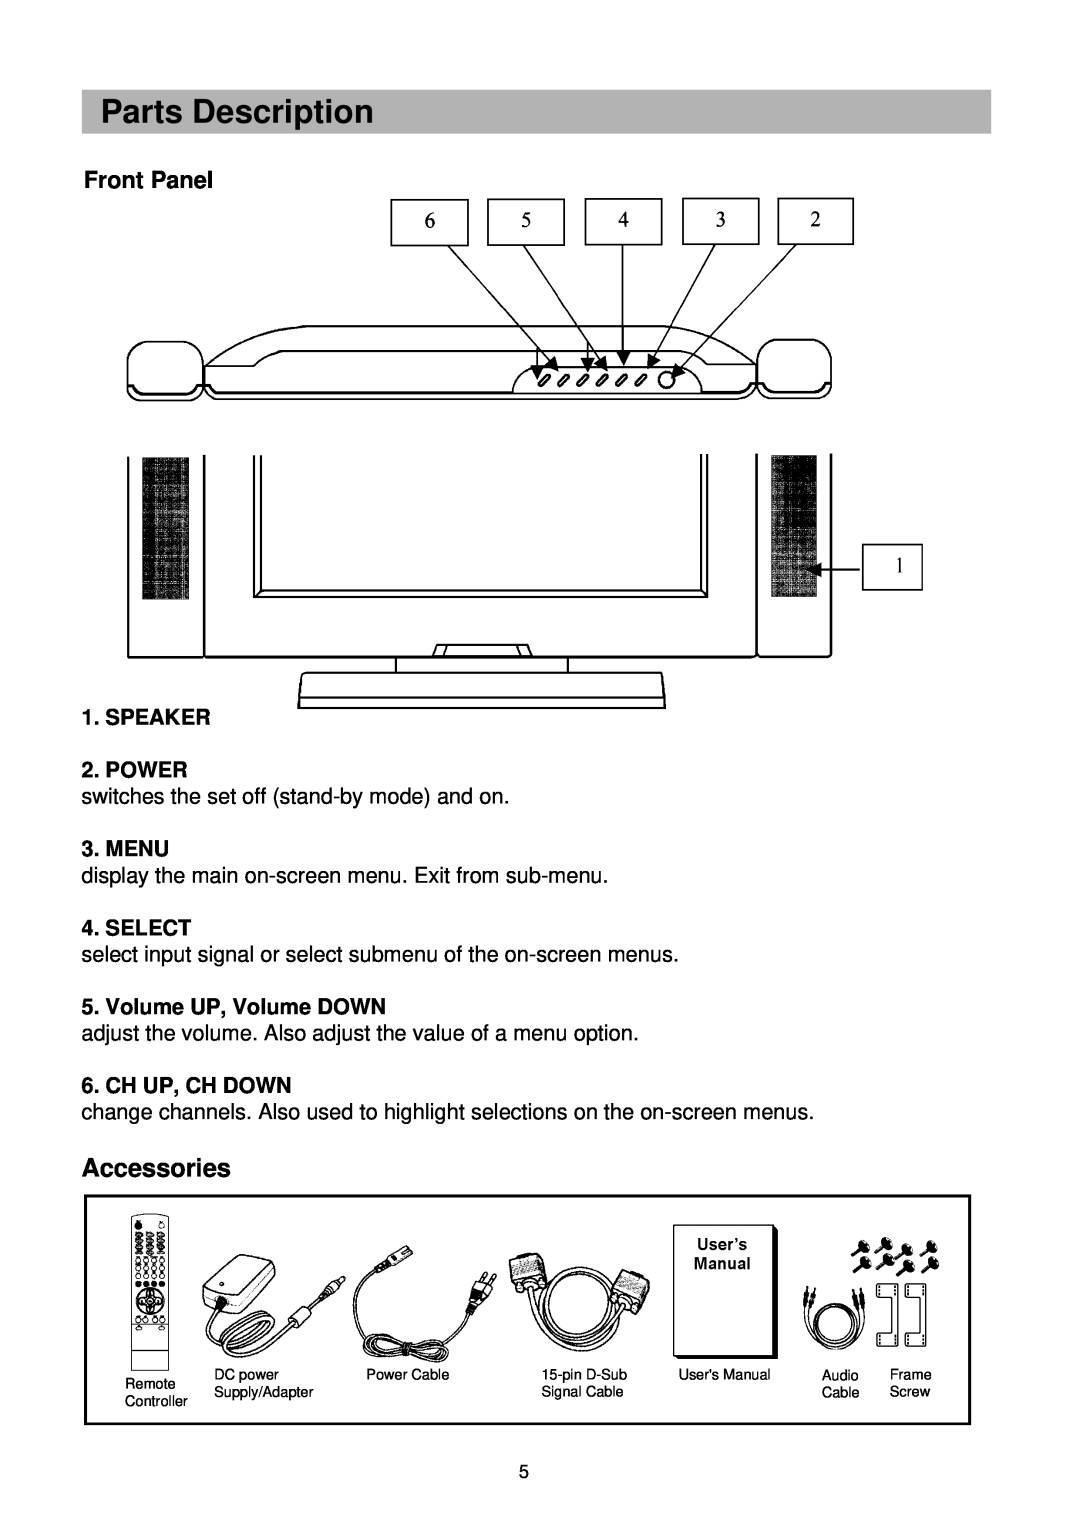 Palsonic TFTV-201 owner manual Parts Description, Accessories, Front Panel 